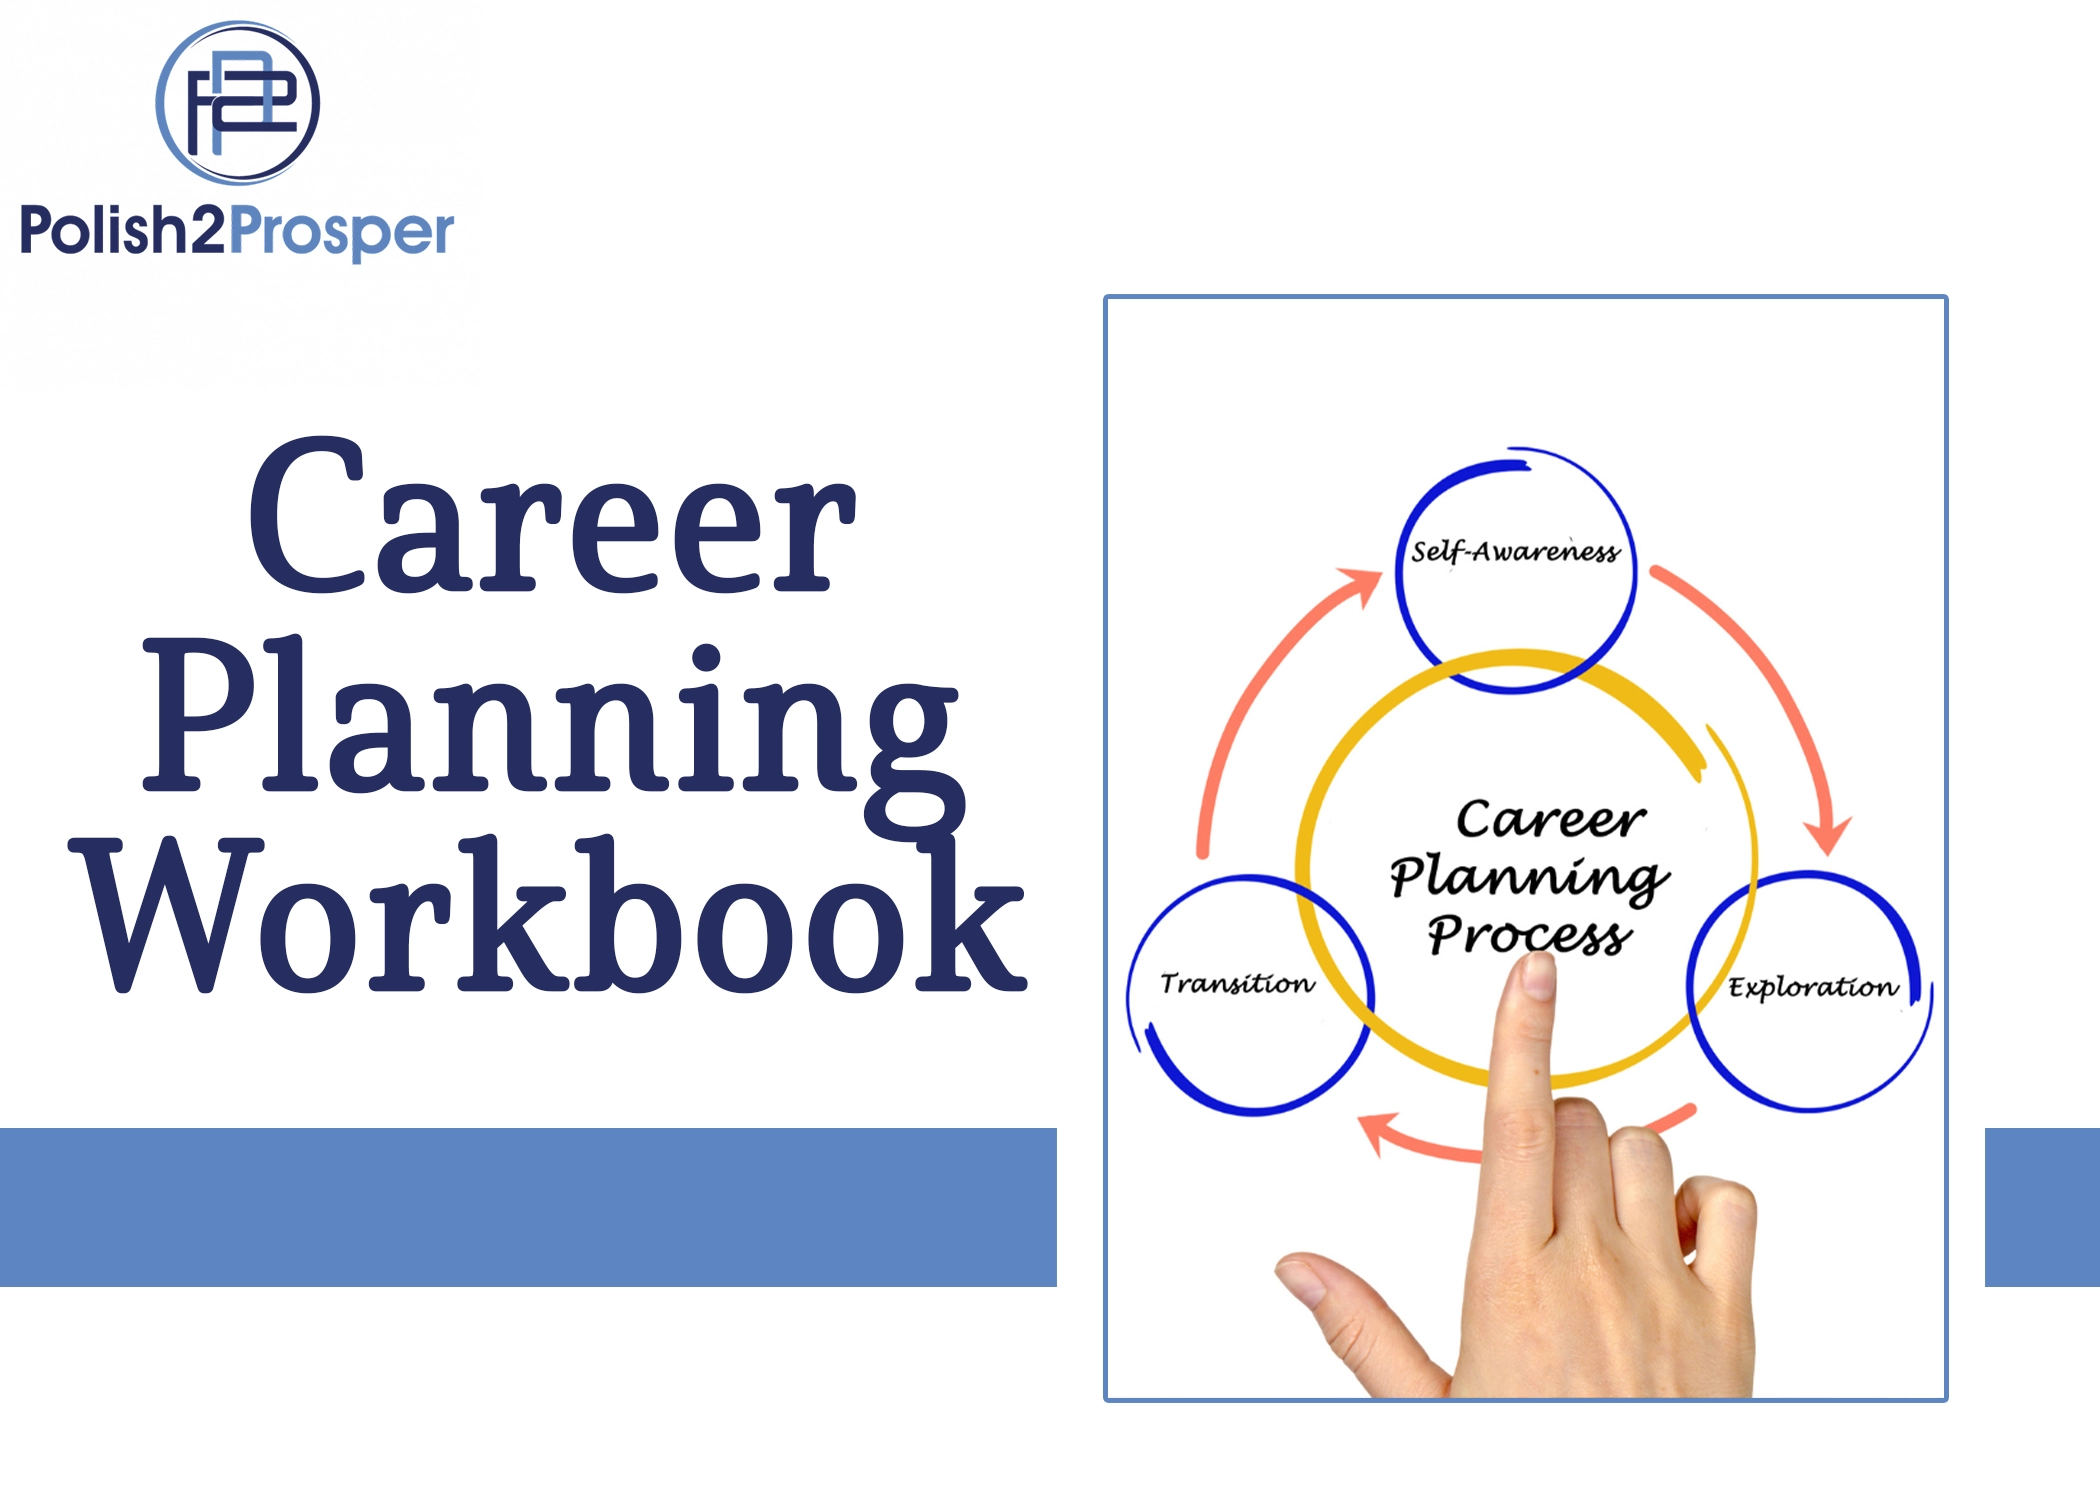 P2P ProductImage careerplanningworkbook